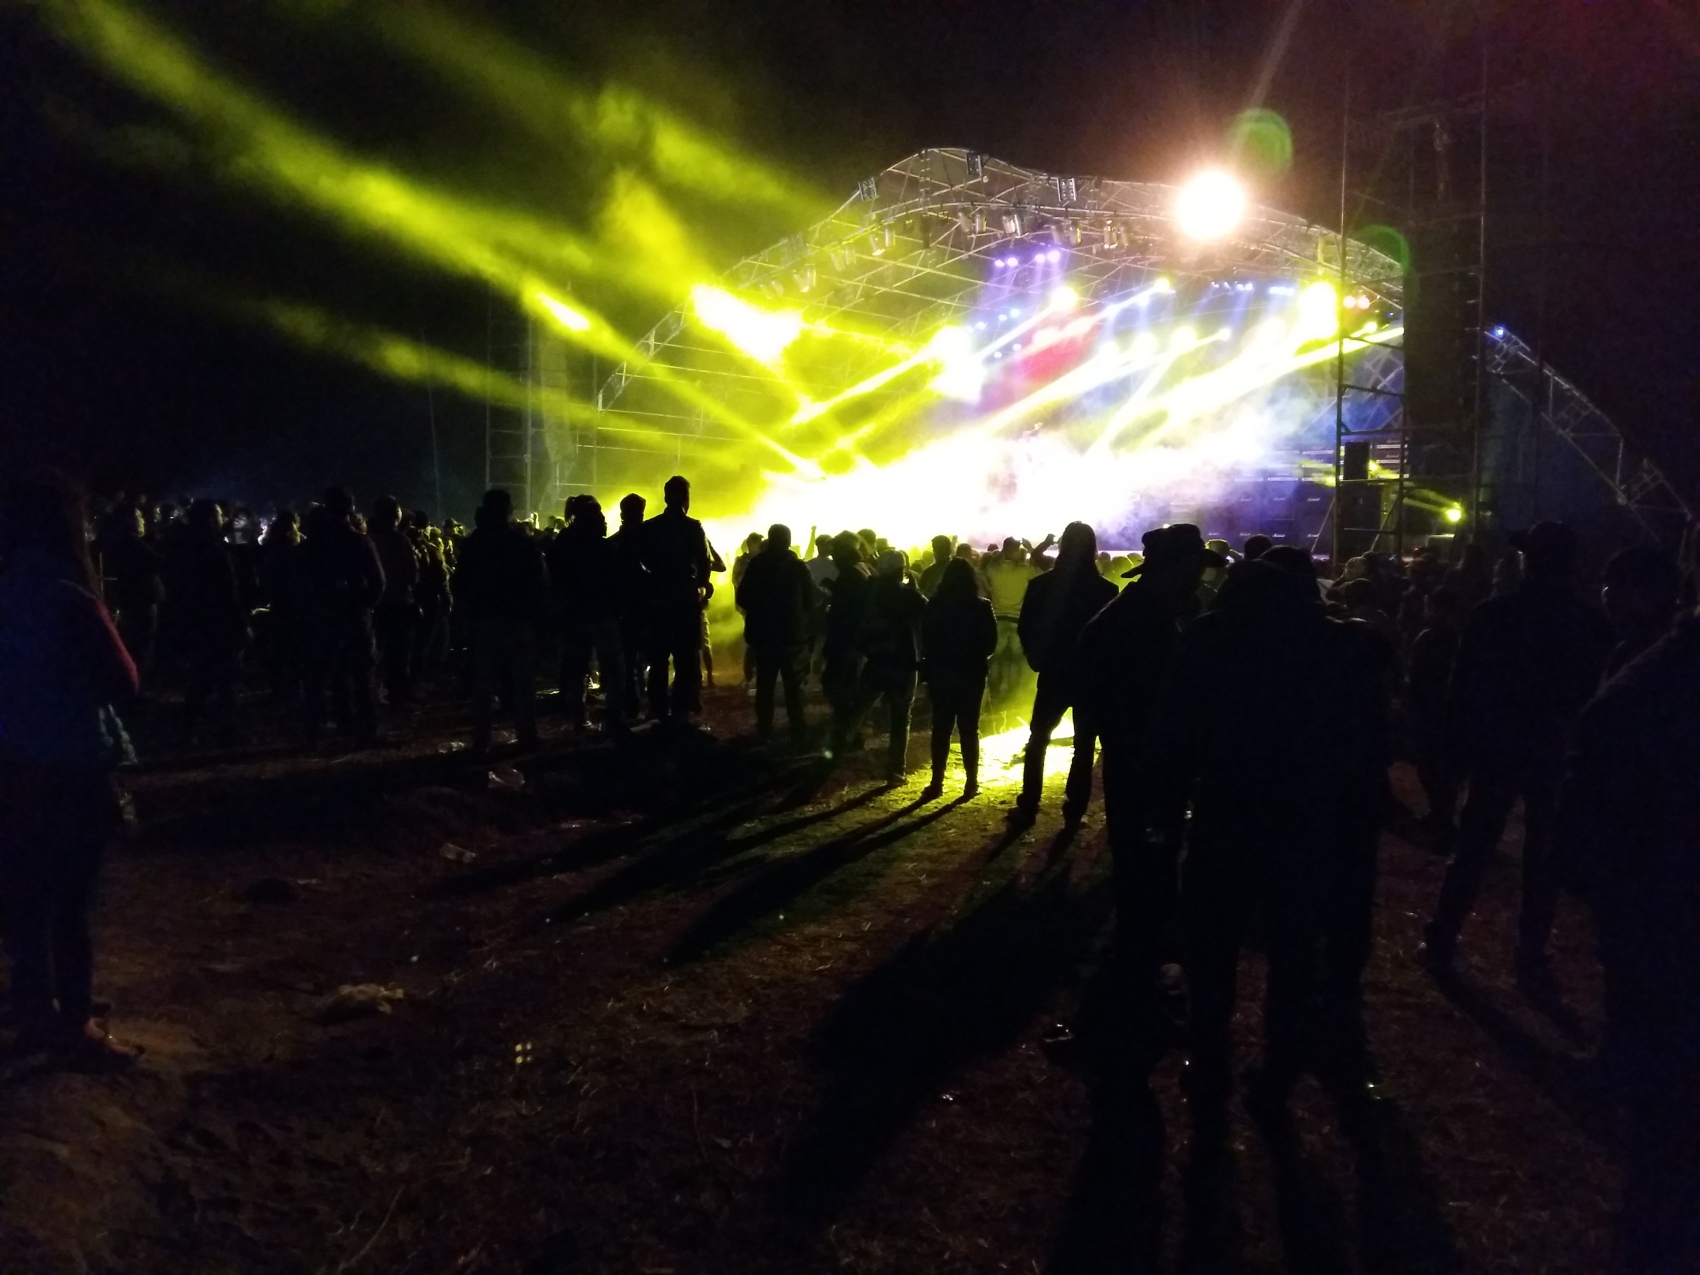 dambuk-adventure-and-muzic-festival-arunachal-pradesh-at-venue-rock-band-at-muzical-evening.jpg